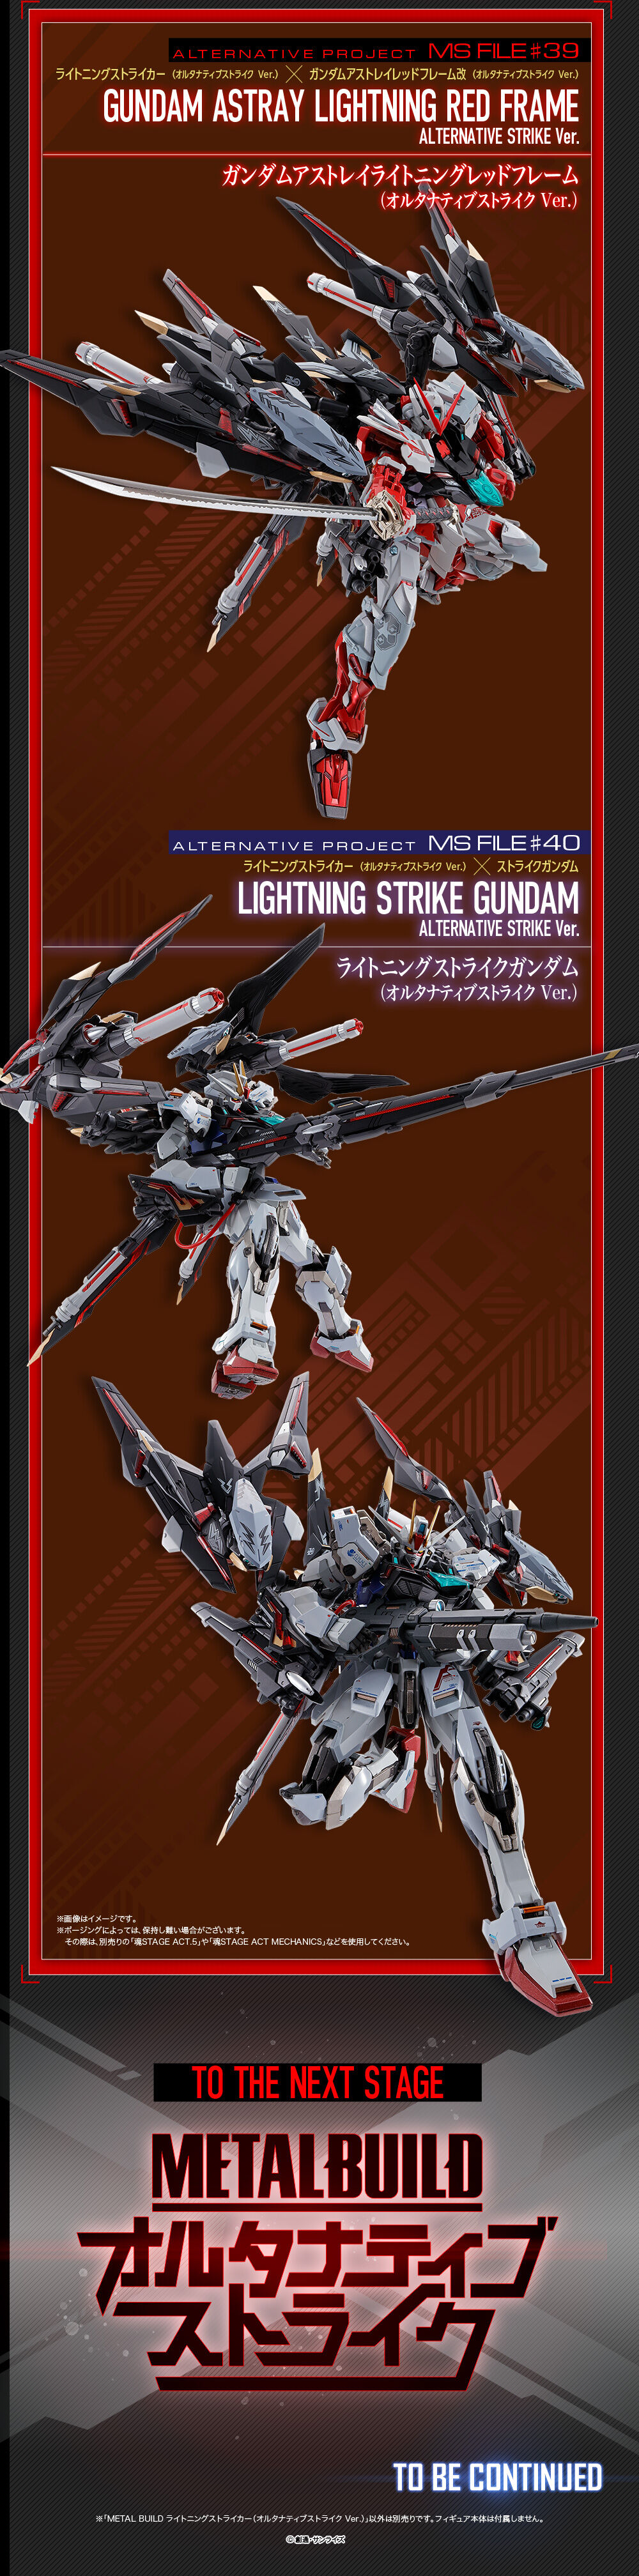 Metal Build P204QX Lightning Striker for Gundam Seed Series(Alternative Strike)